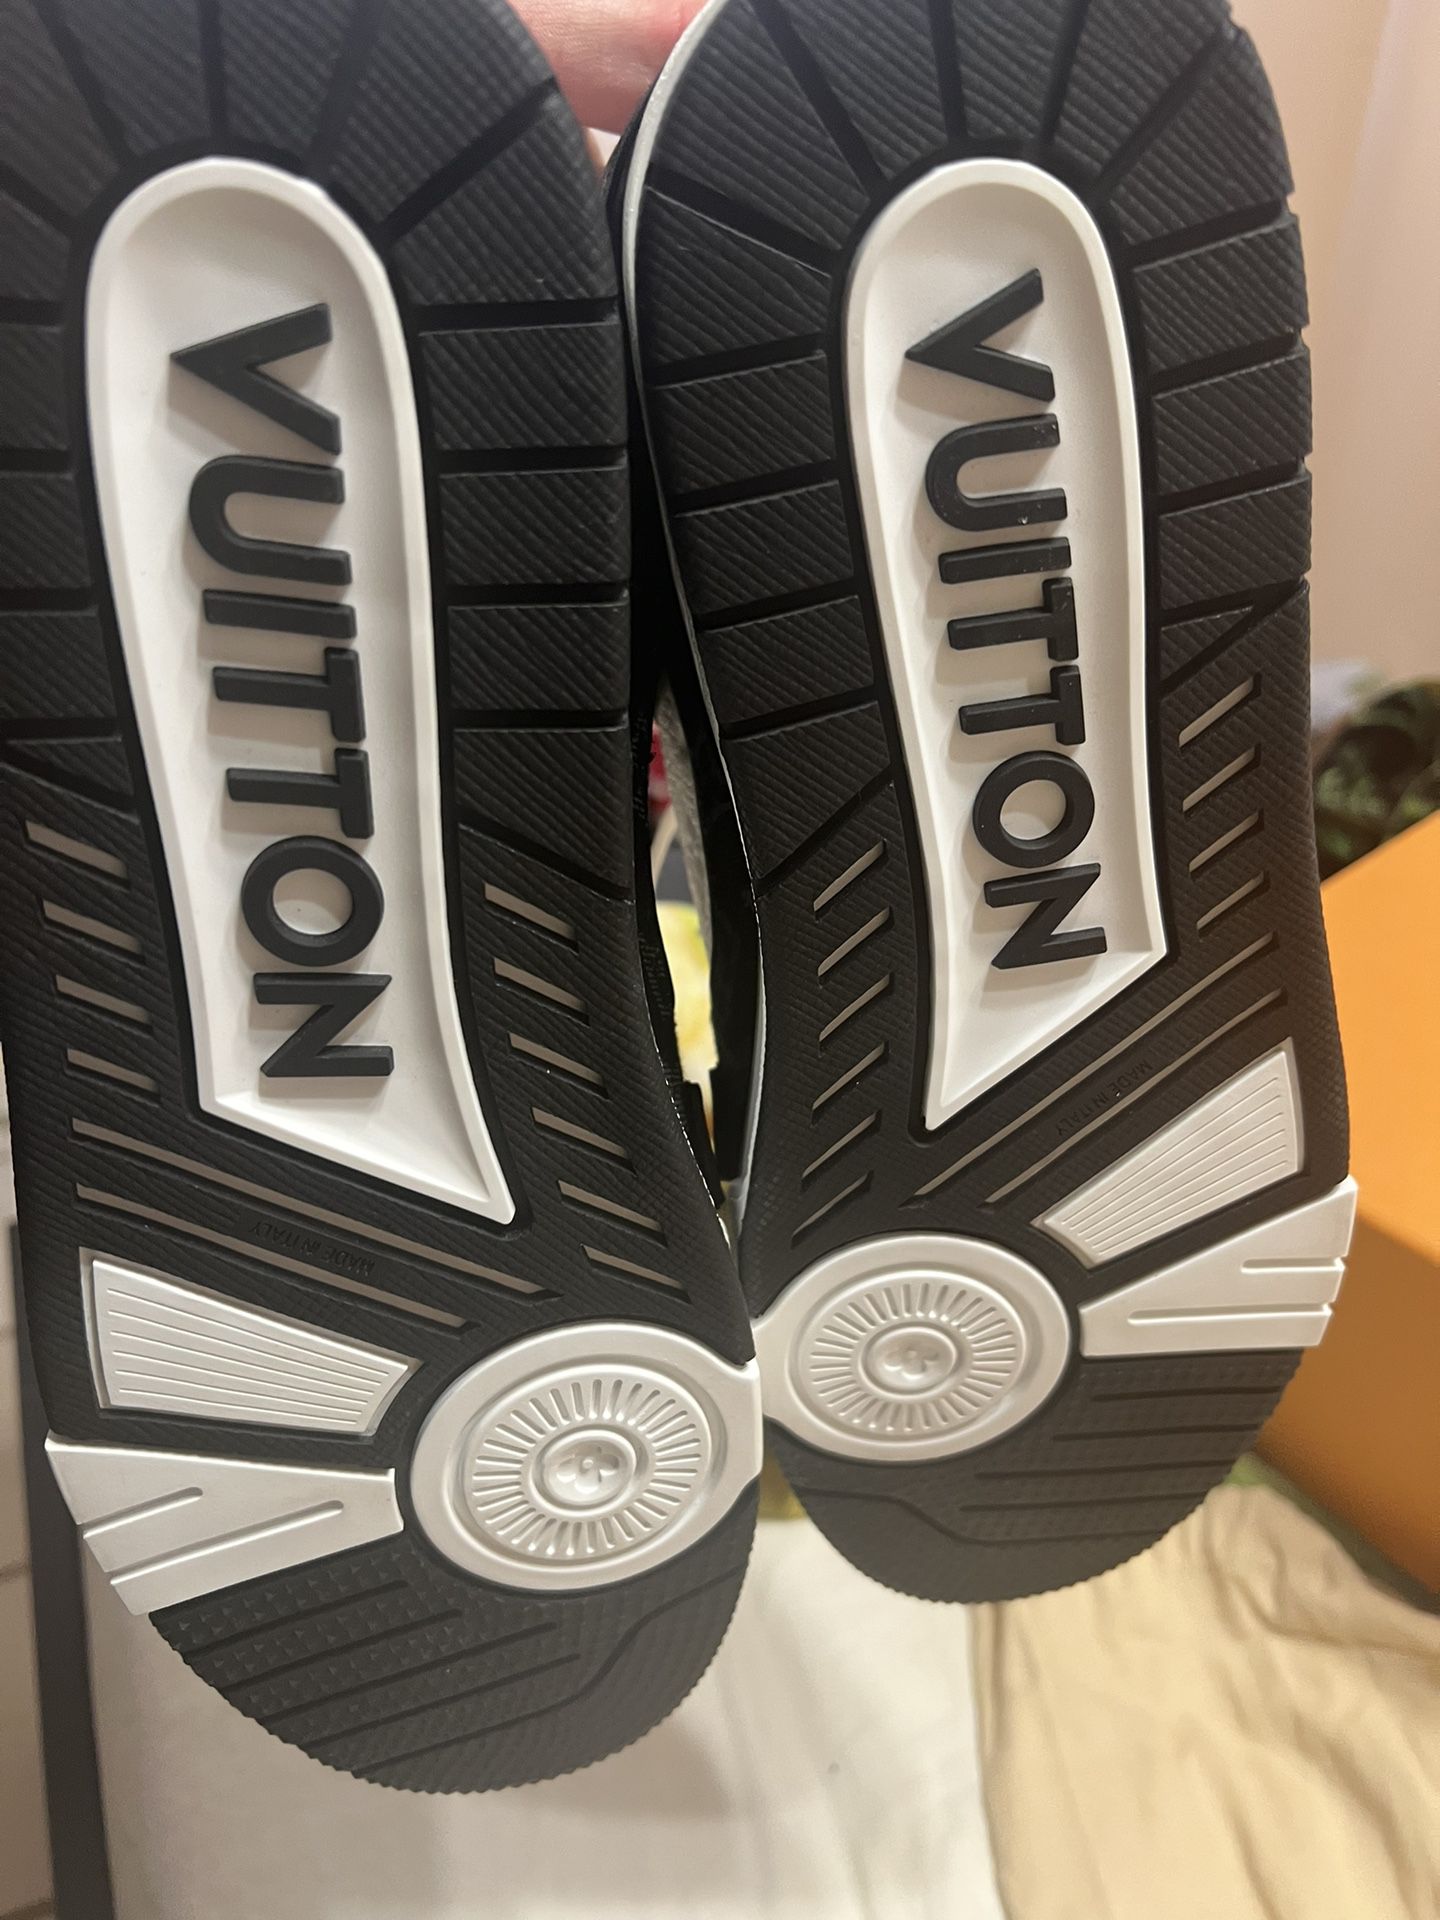 Louis Vuitton Trainer 60 for Sale in El Mirage, AZ - OfferUp